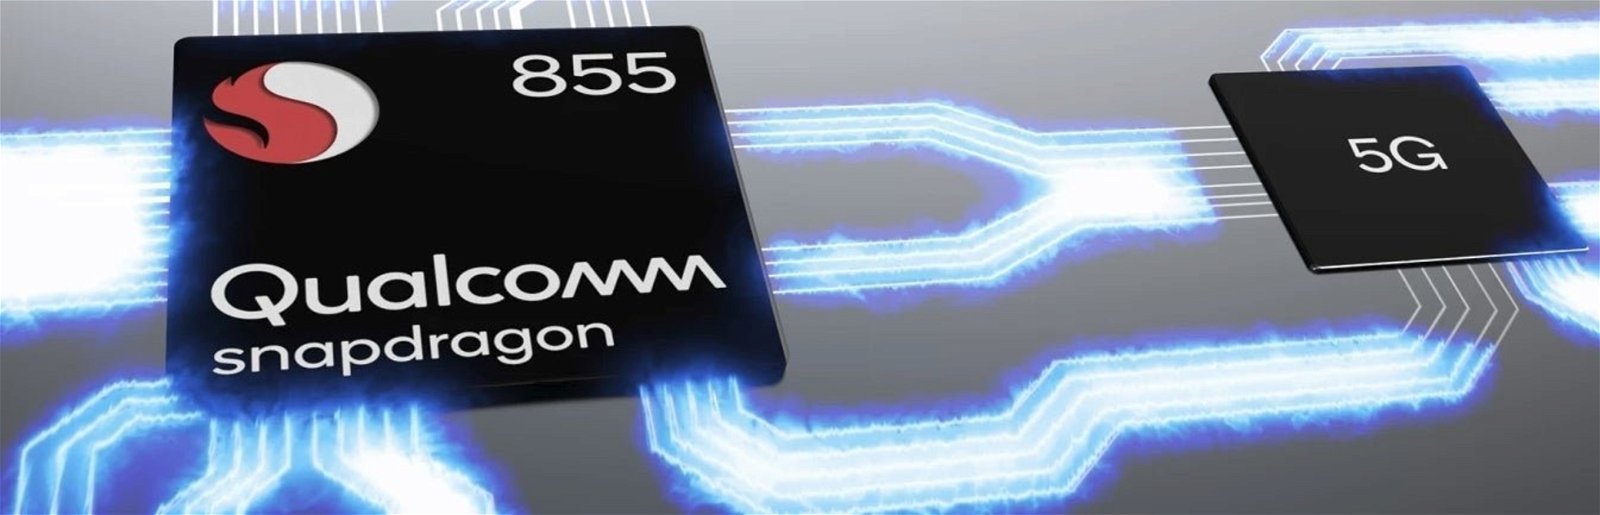 Qualcomm Snapdragon 855 con 5G